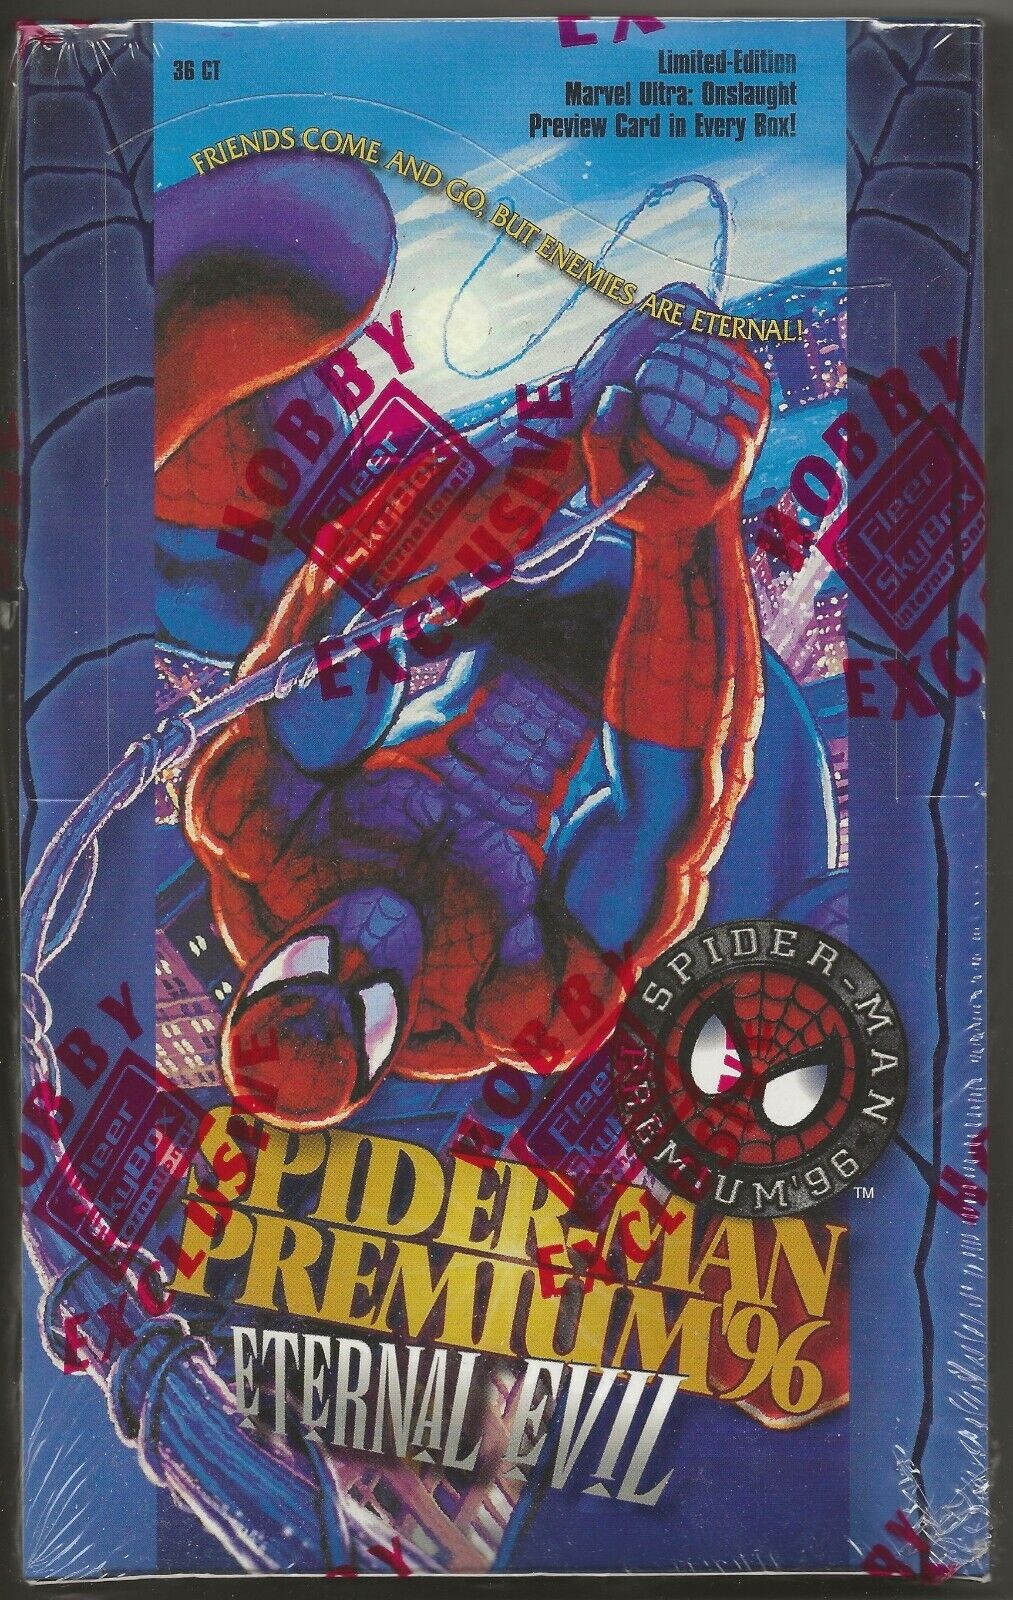 Spider-Man Premium \'96 Eternal Evil Trading Card Box, Sealed, SkyBox, Marvel